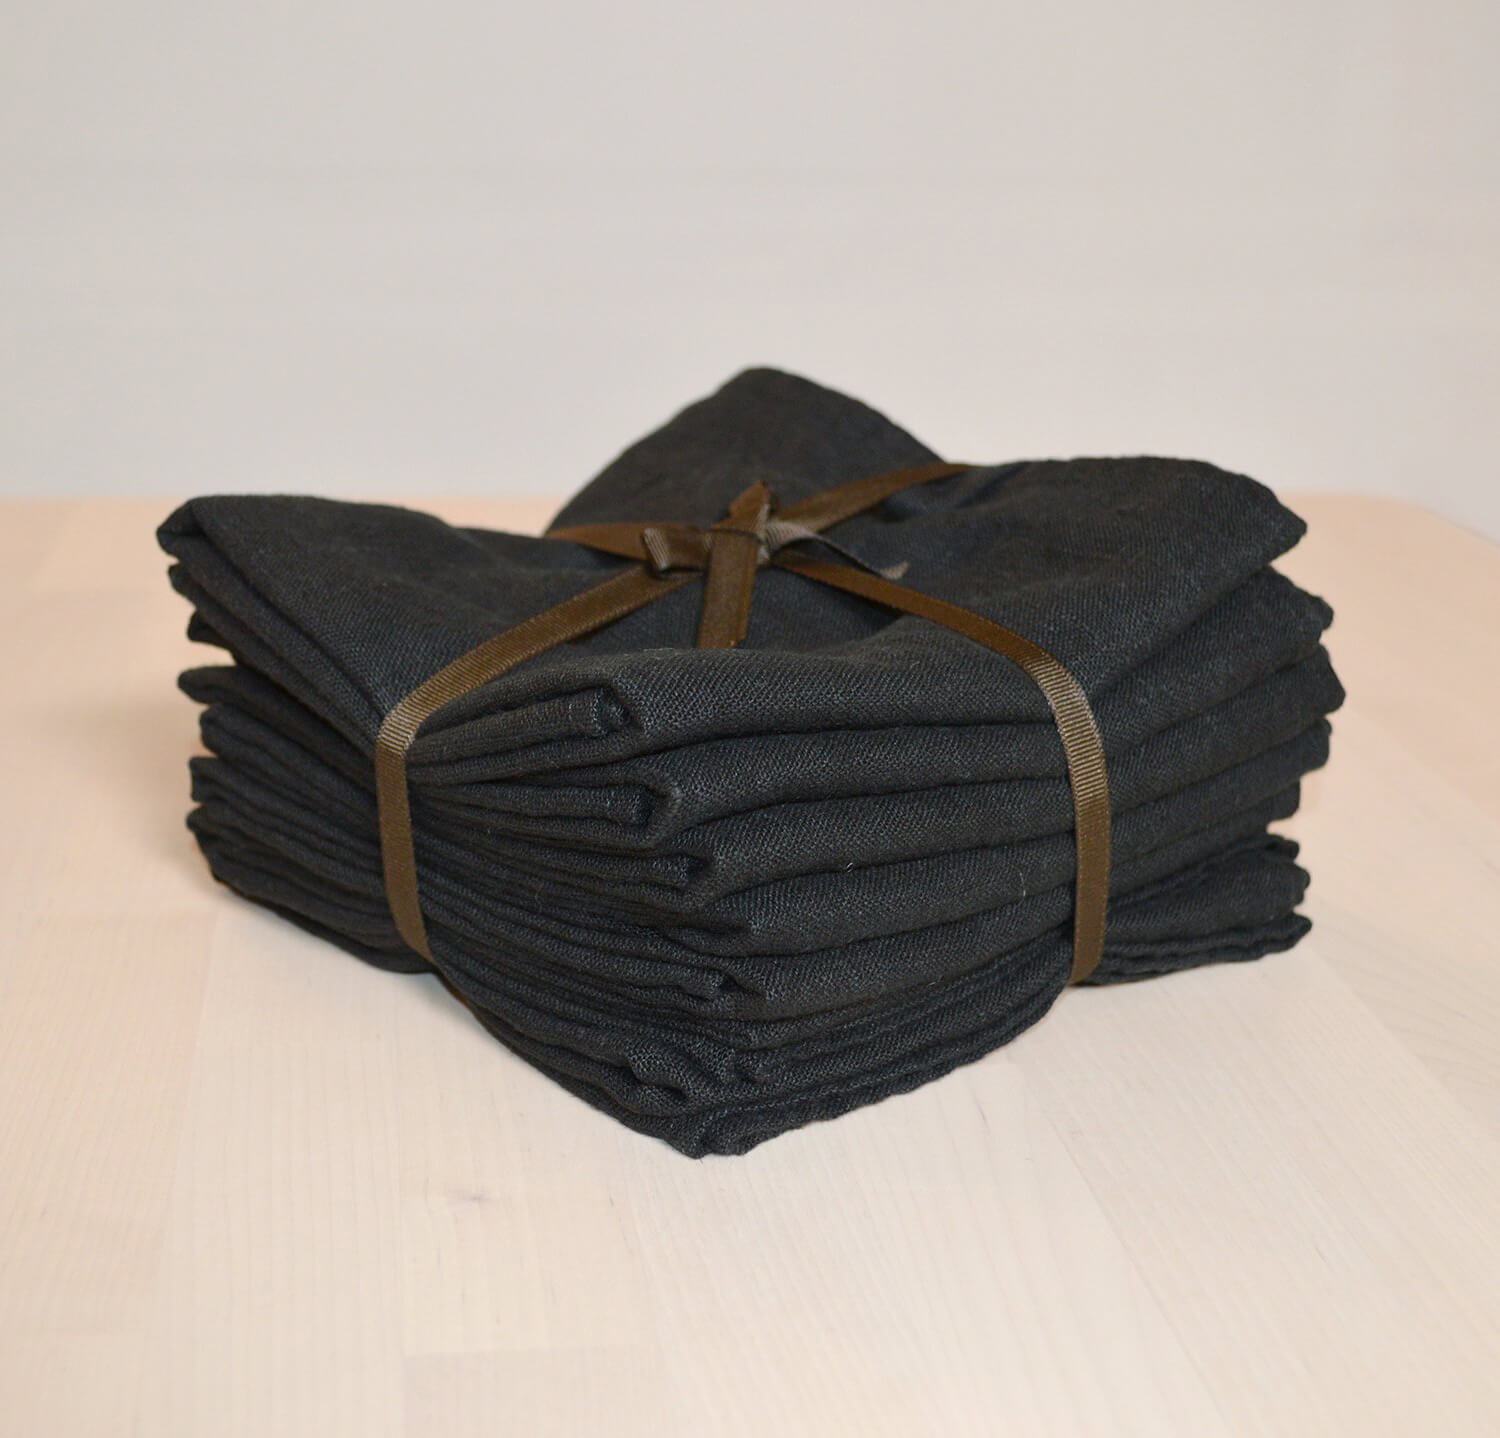 Black Linen Tea Towels. Linen Kitchen Towels With Loop for Hanging.  Handmade Linen Dish Towels. Eco-friendly Minimalist Kitchen Decor Ideas. 